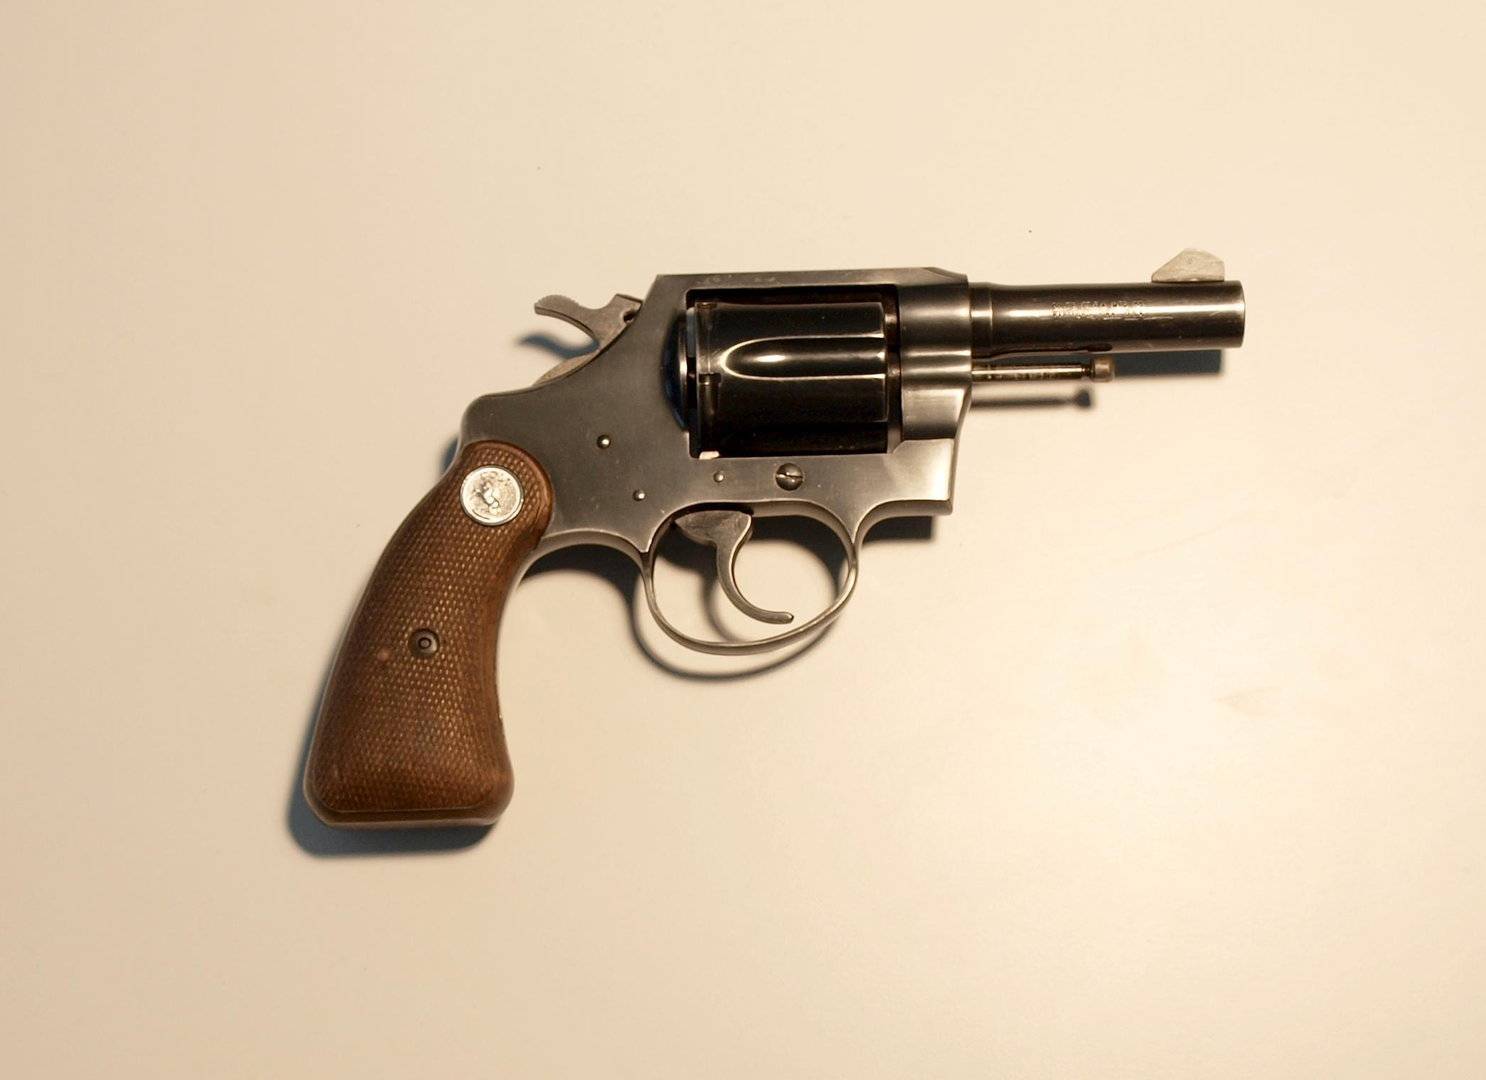 Colt detective special - револьвер в стиле нуар